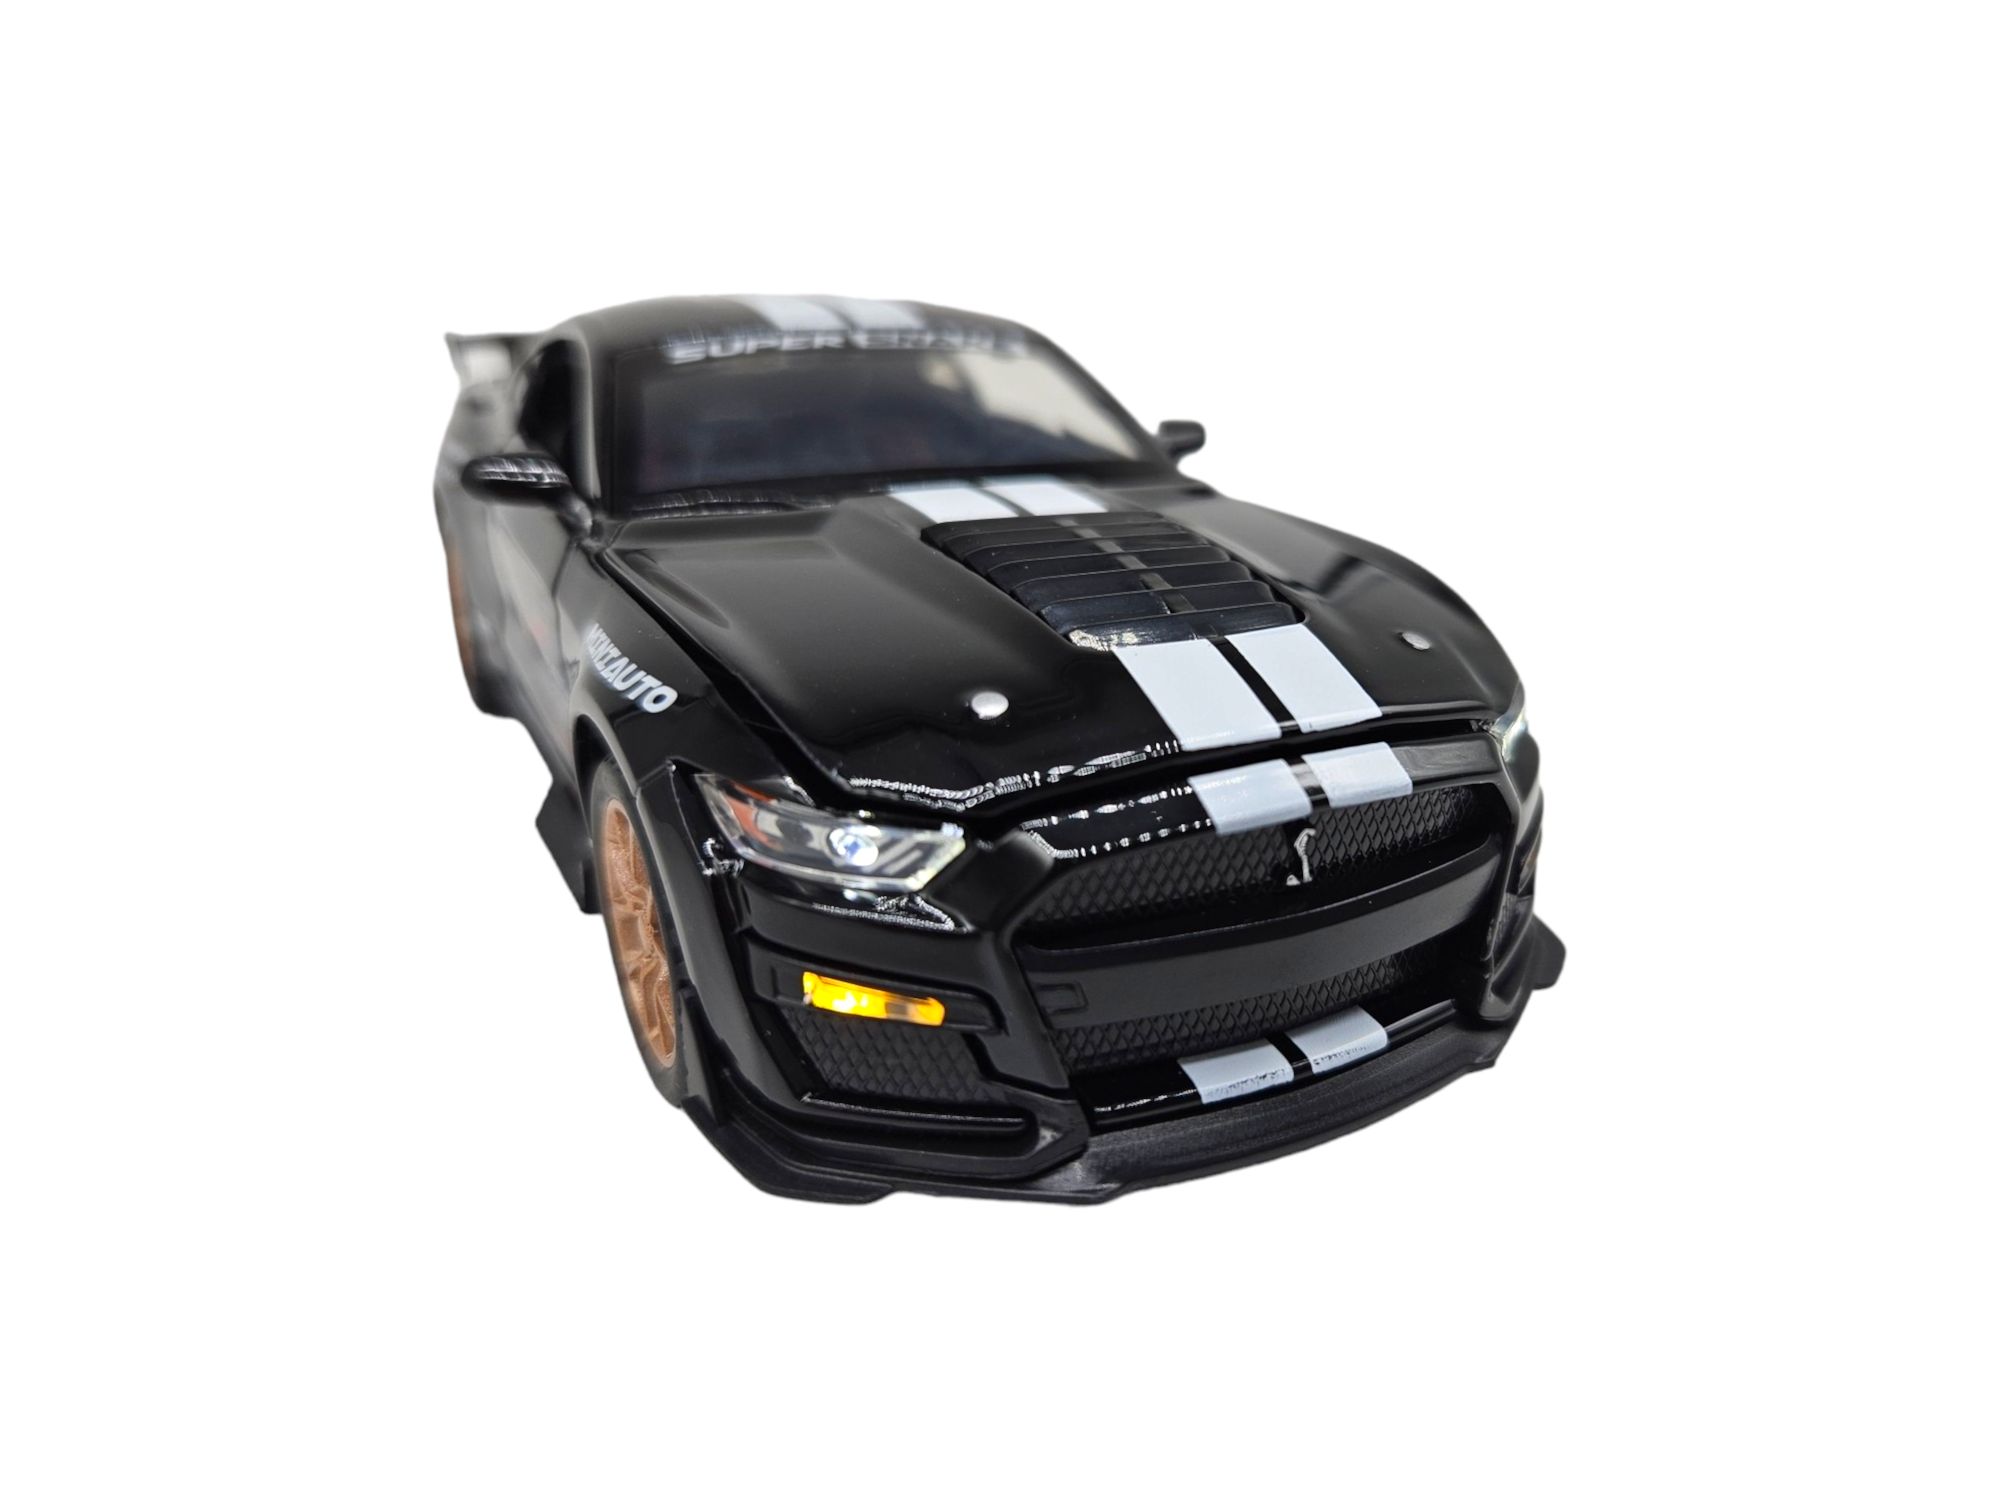 Masina metalica Mustang Shelby GT,Sunete,lumini,usi mobile,16cm, Negru